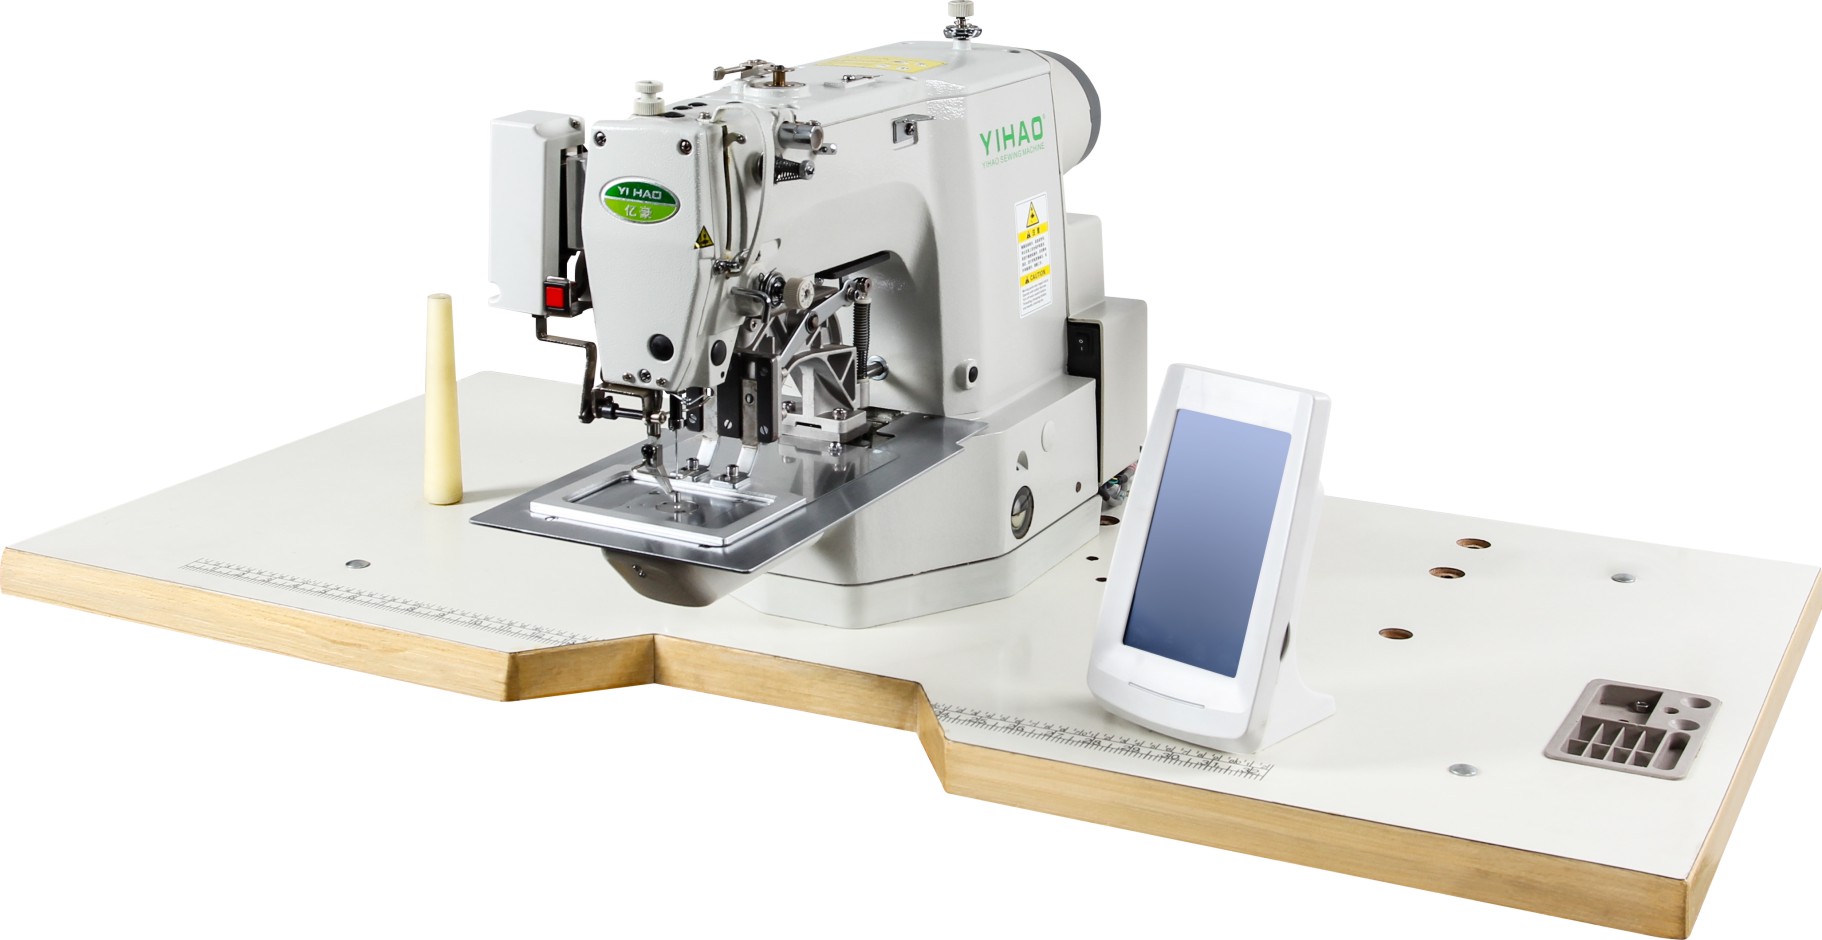 Yh-0906 direct drive computer pattern sewing machine